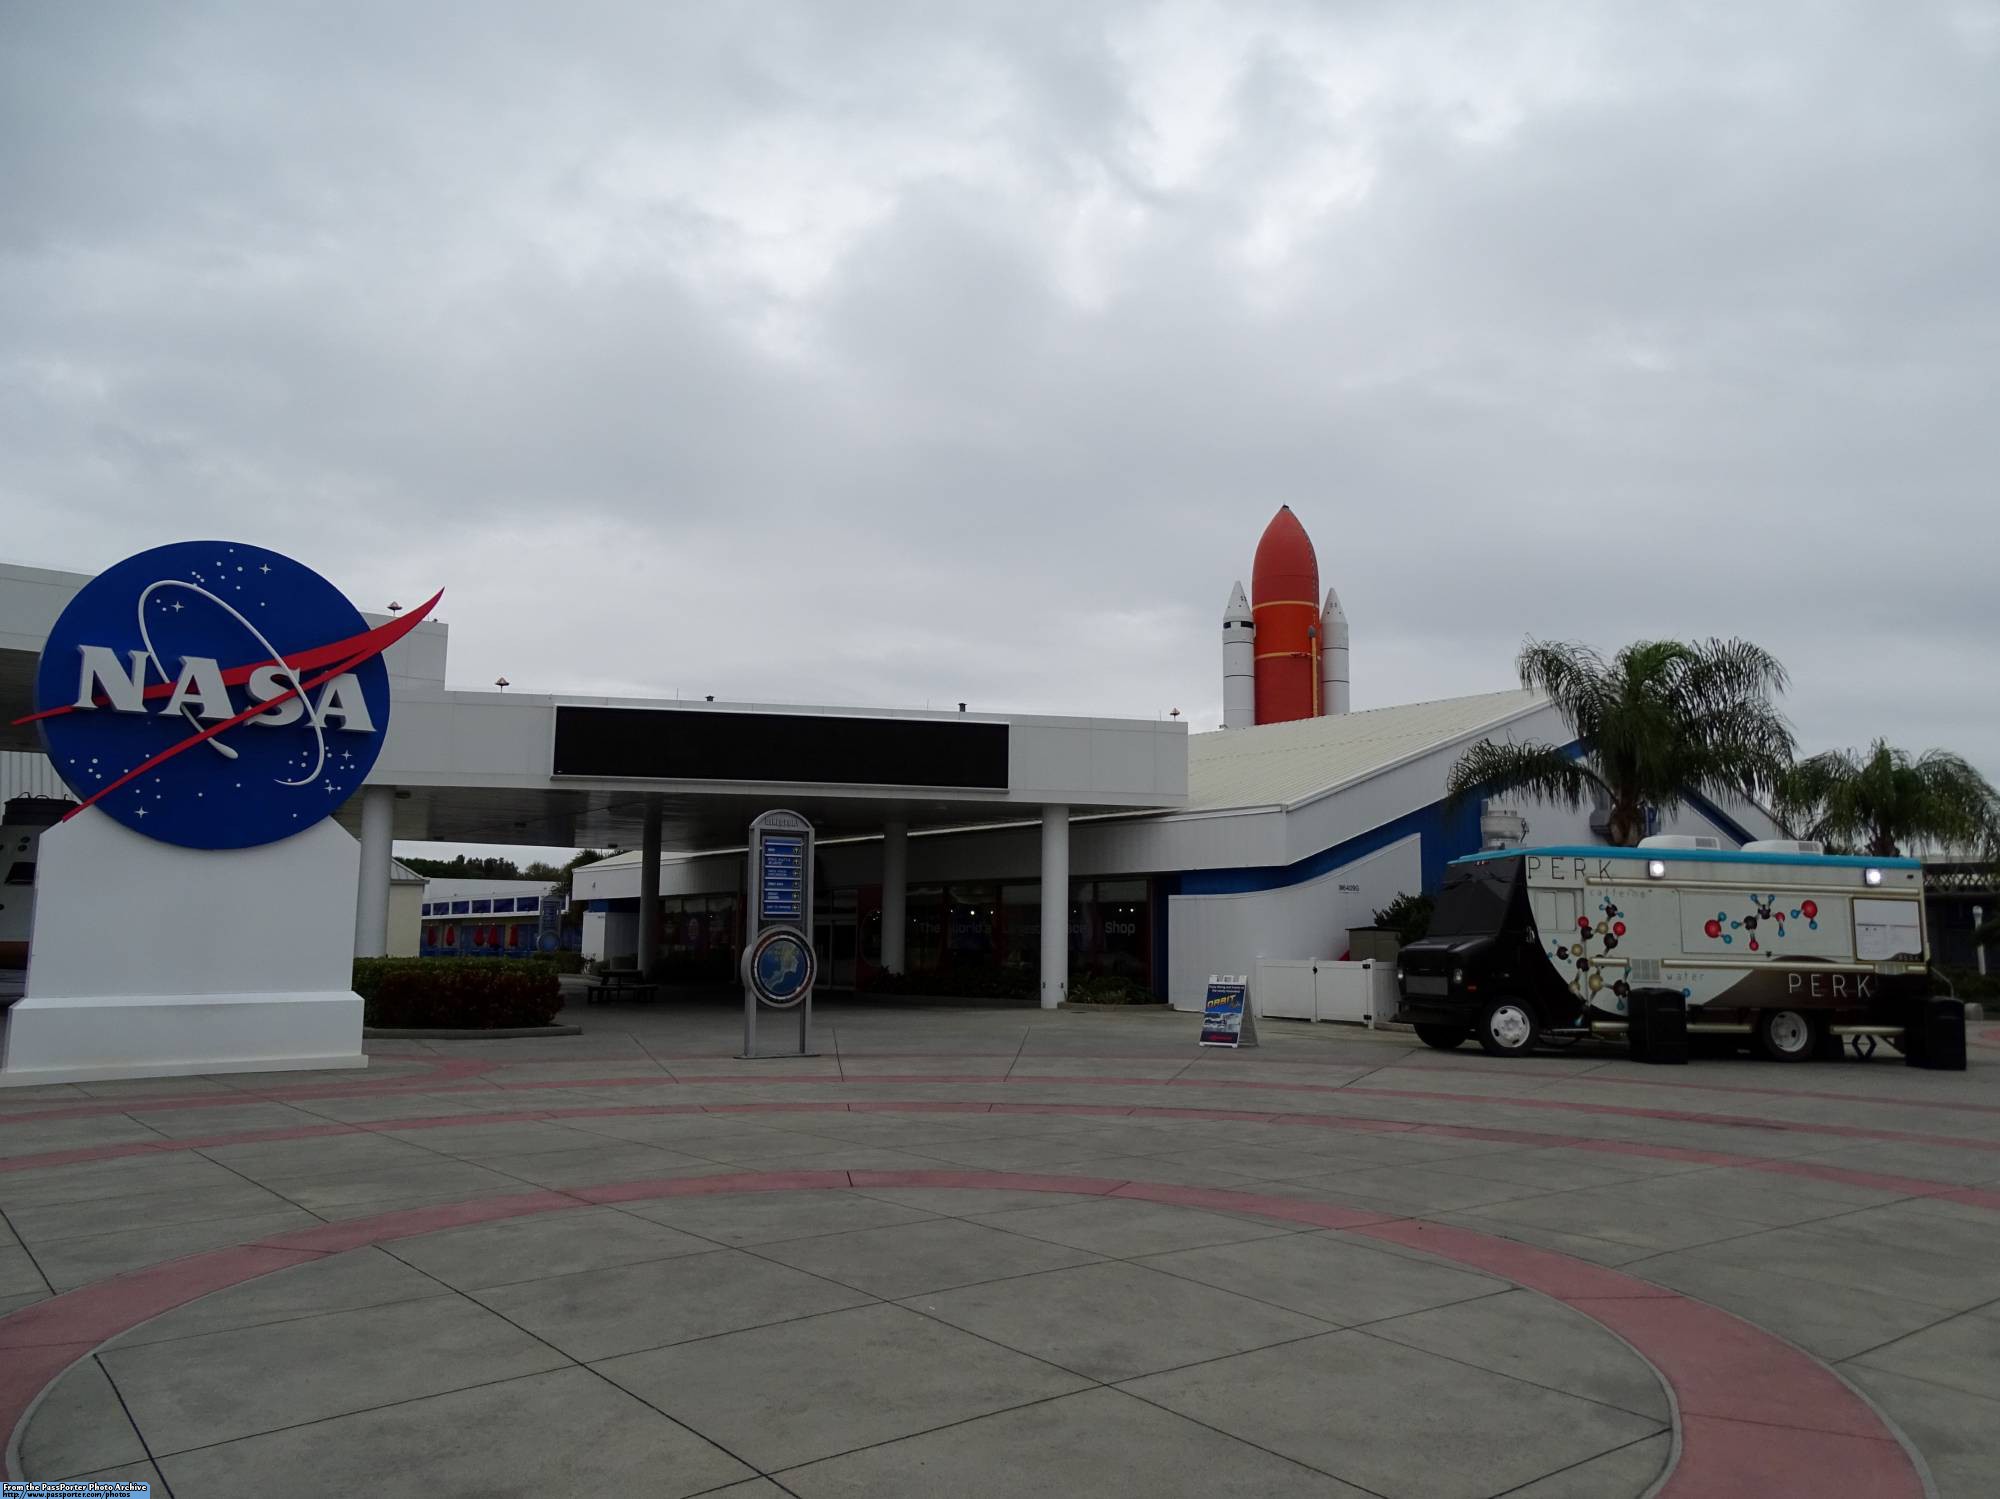 Kennedy Space Center – entrance area